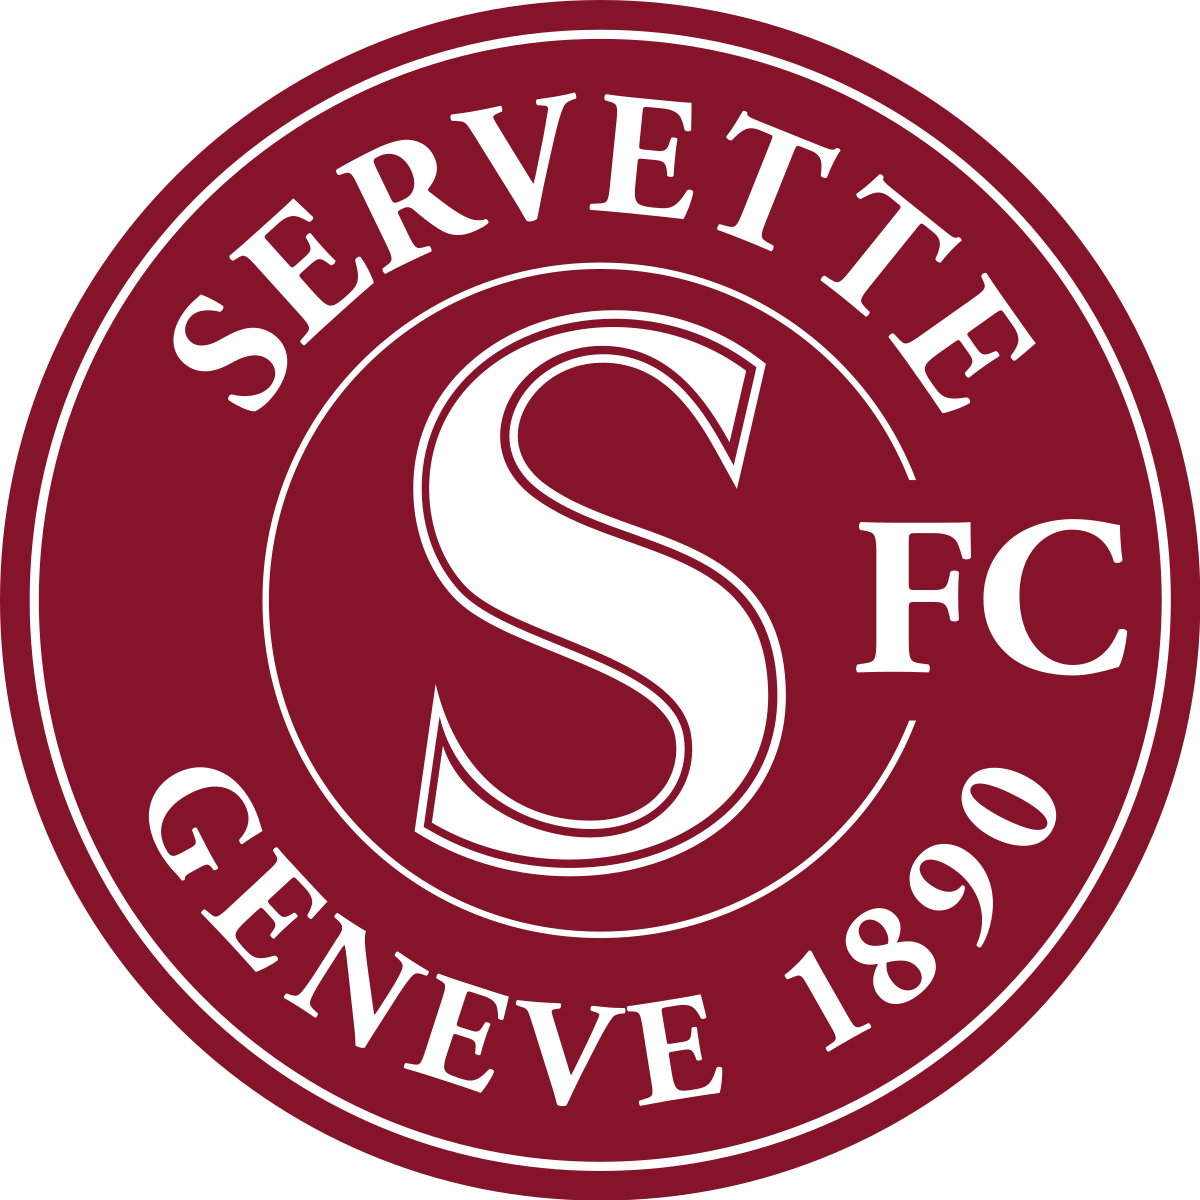 Association du Servette Football Club – Wikipédia, a ...